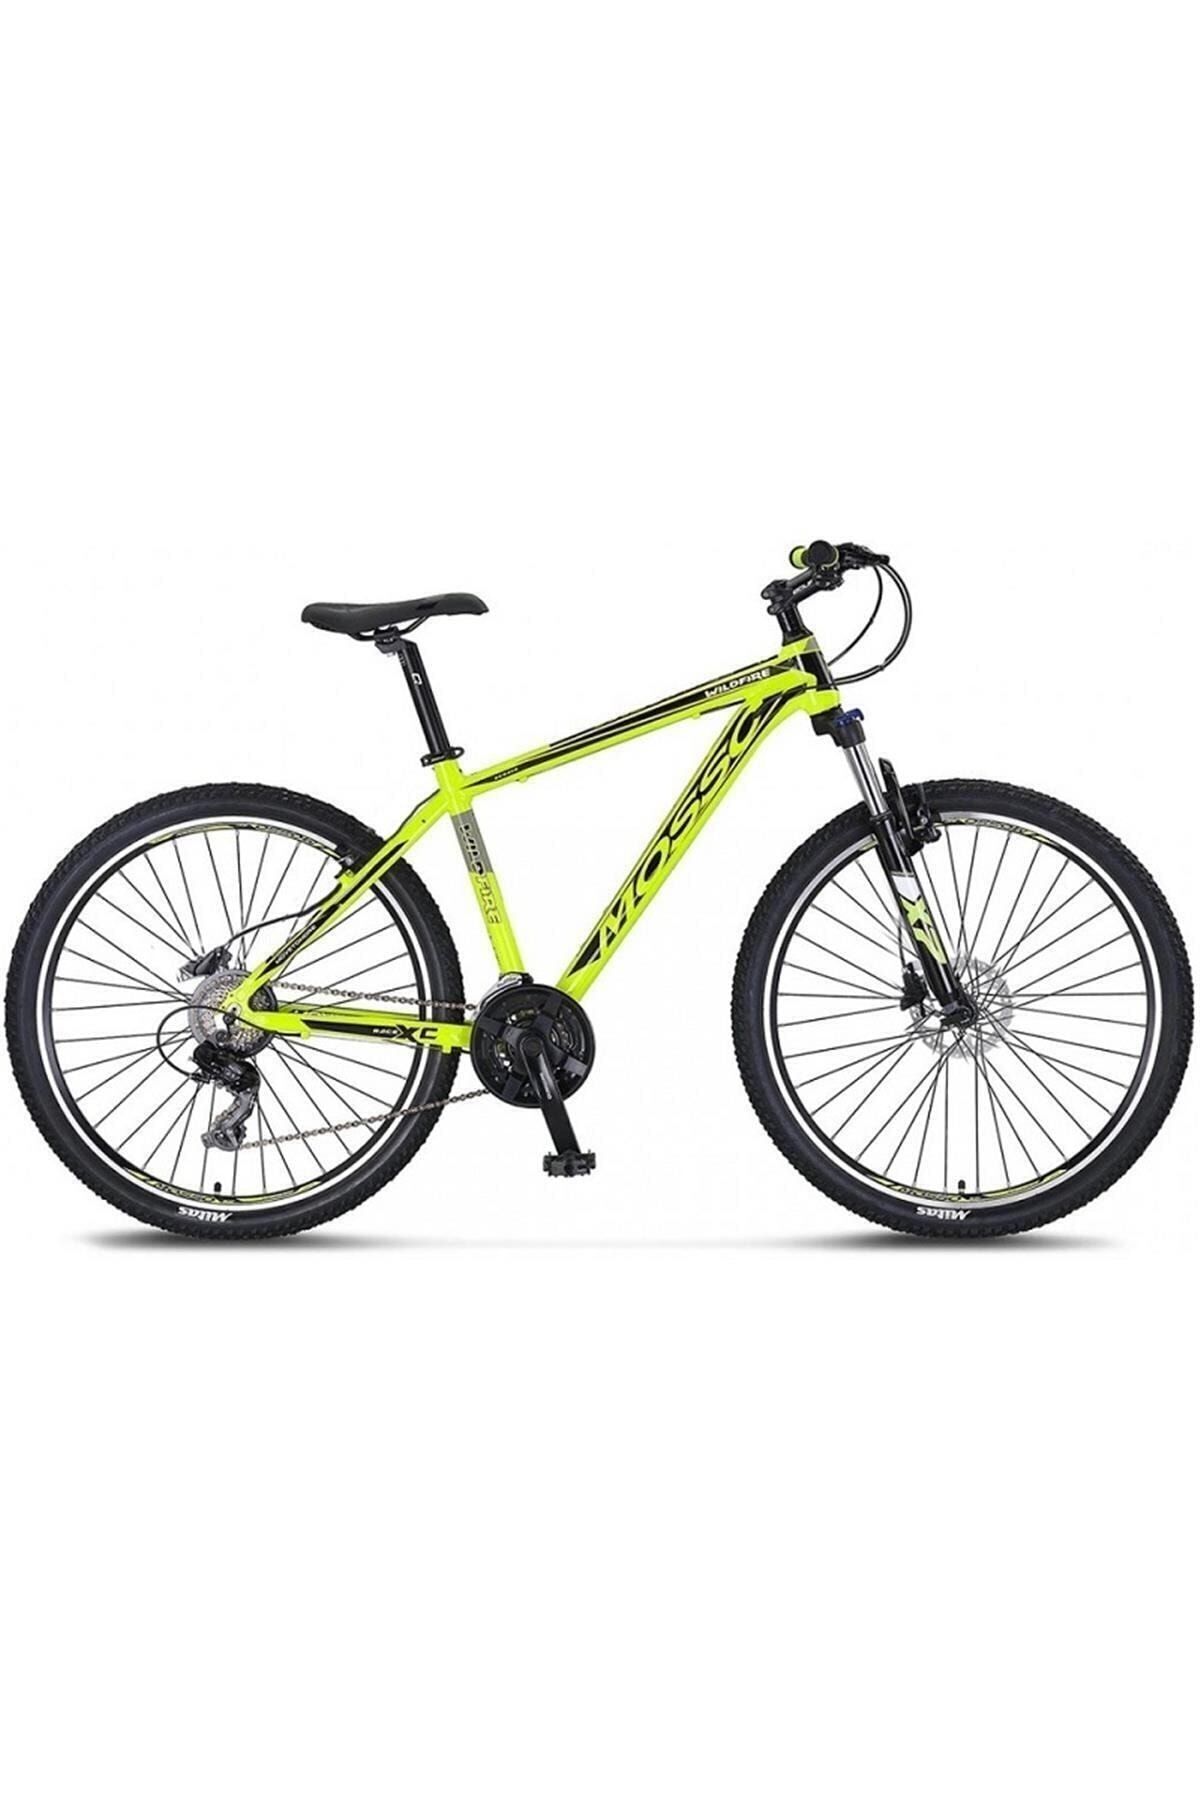 Mosso Wildfire 27.5 Jant Hidrolik Disk Fren Erkek Dağ Bisikleti-2021- Lime - Siyah